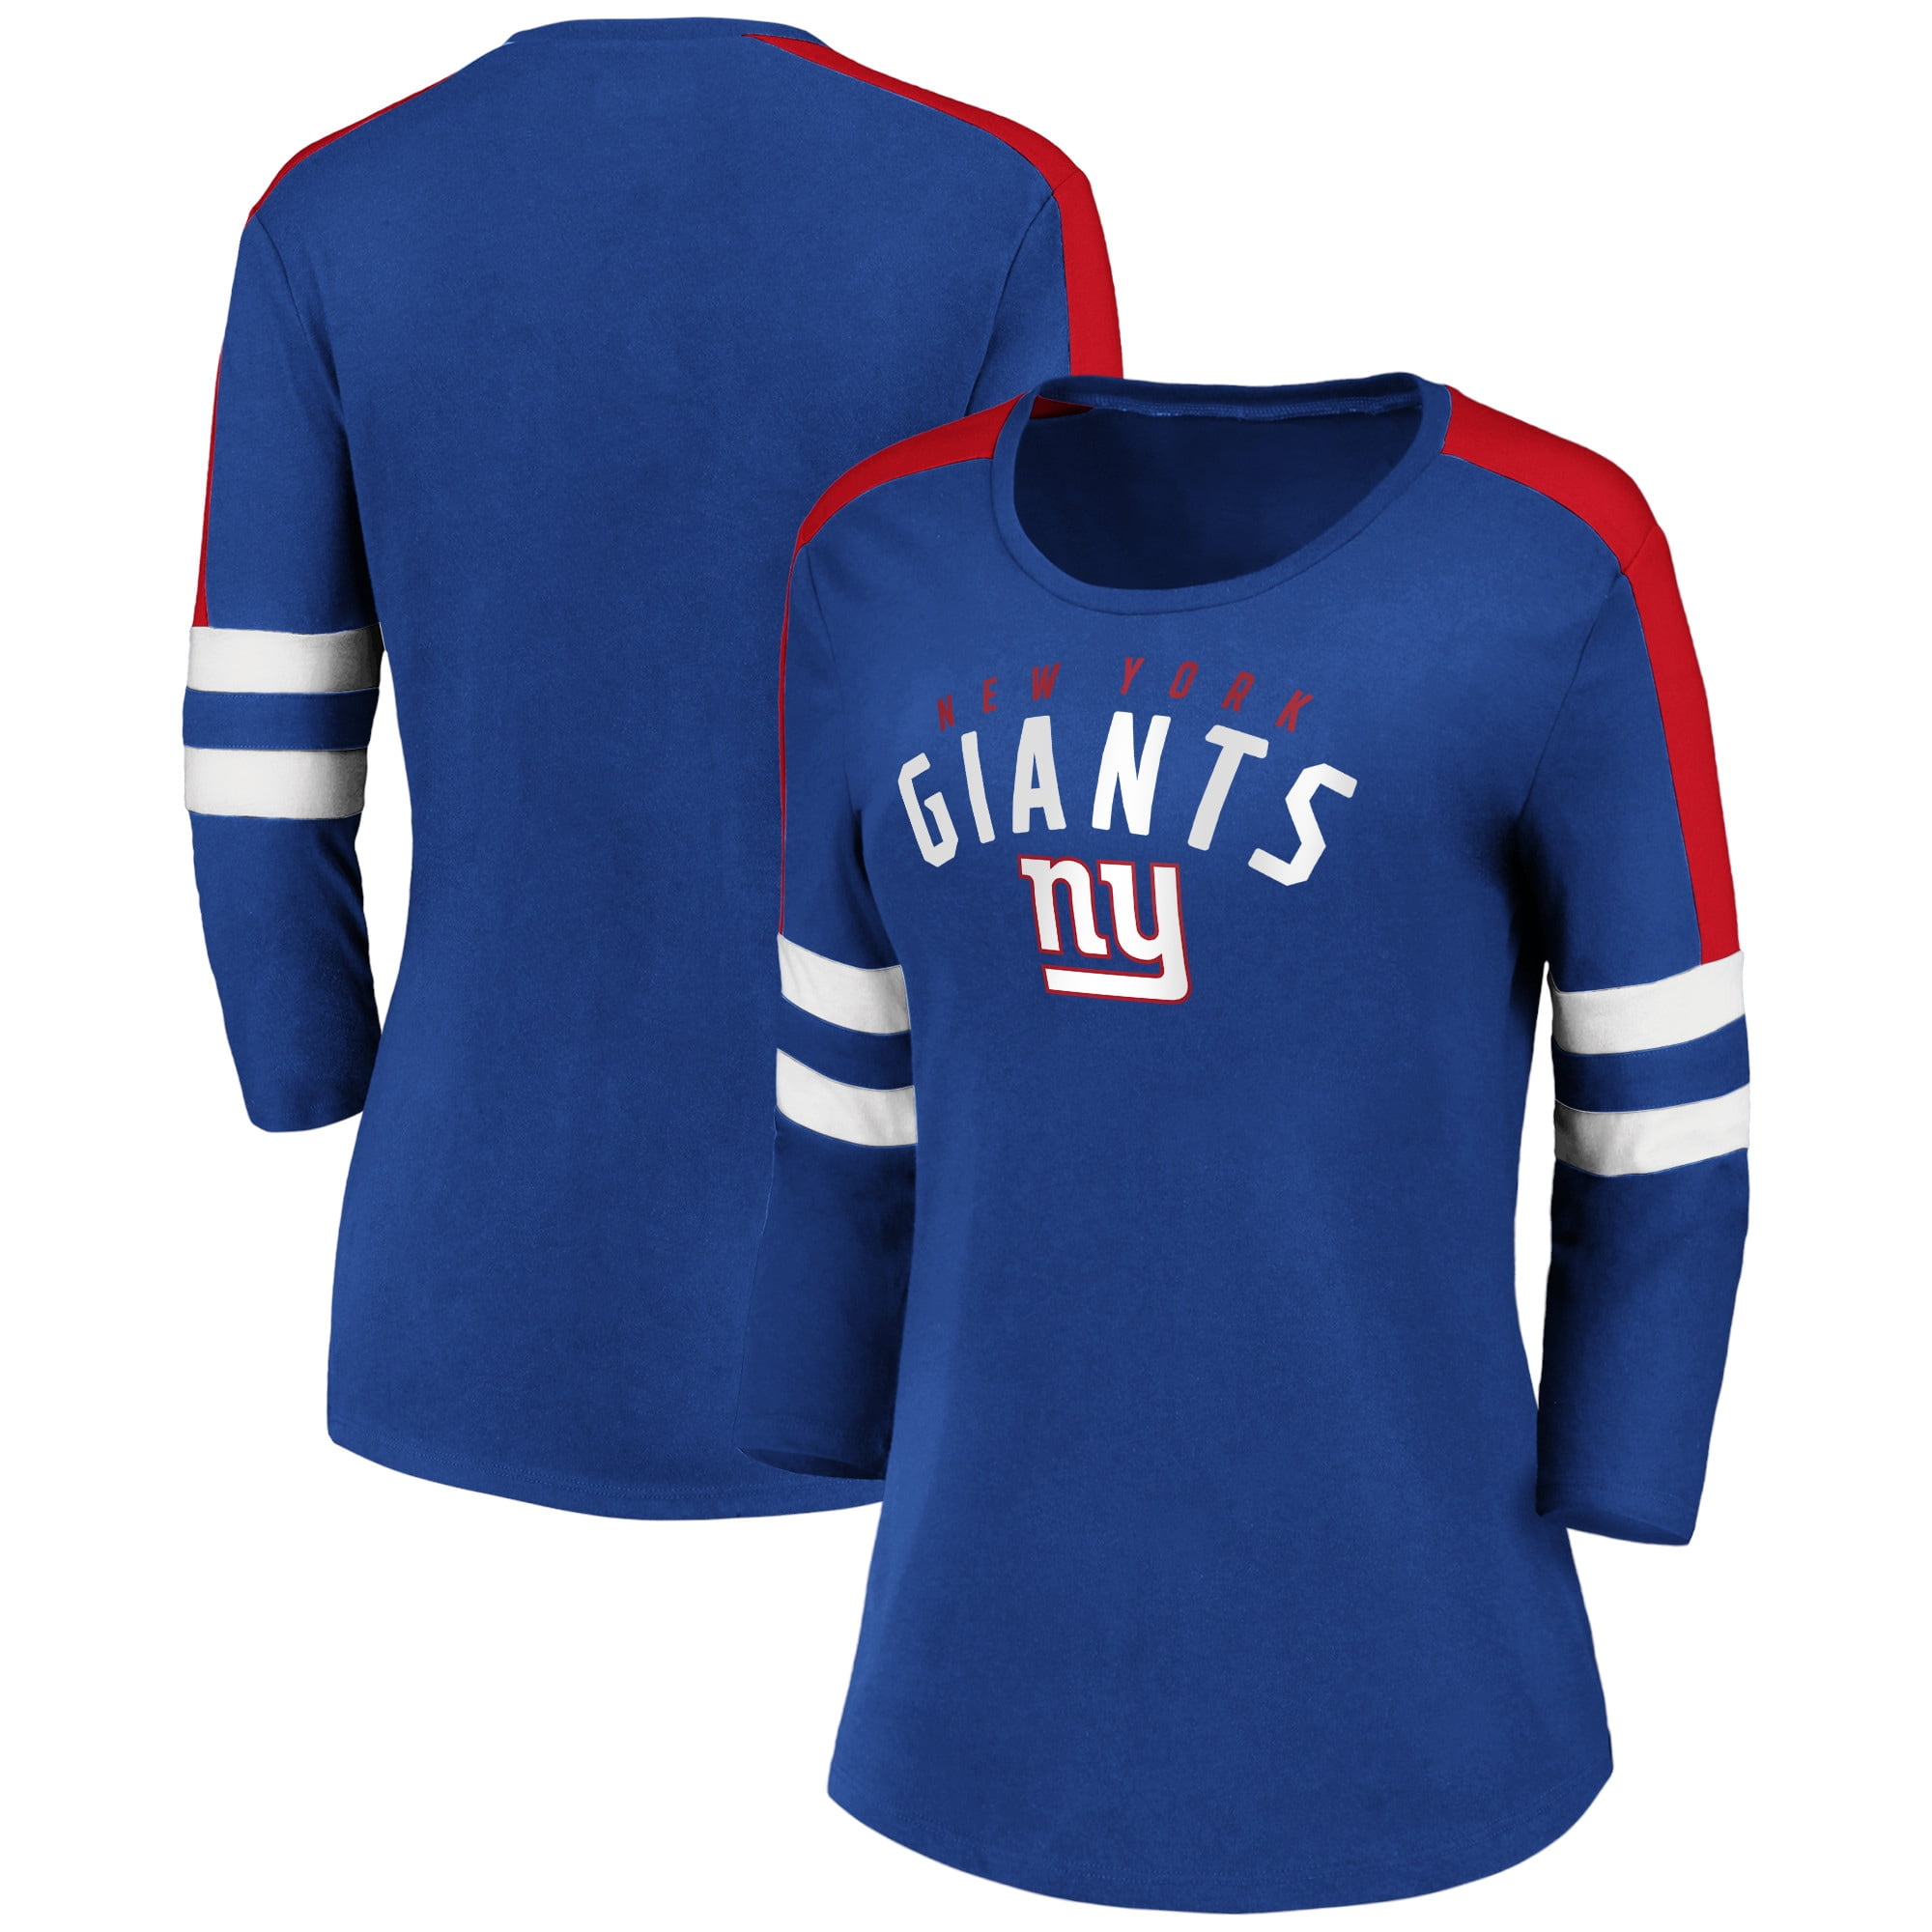 New York Giants Womens - Walmart.com